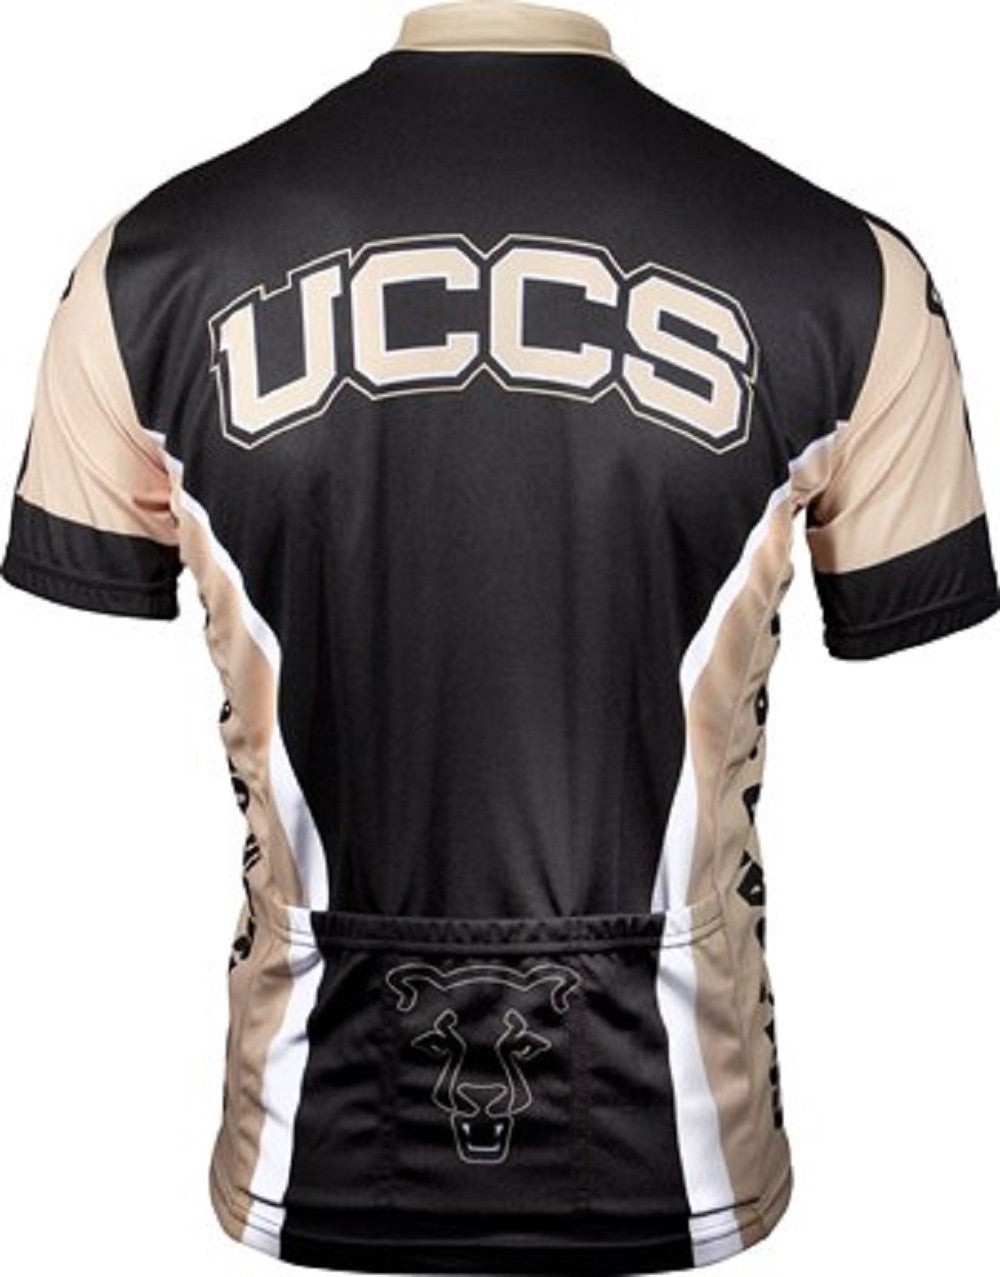 UCCS Men's Cycling Jersey (S, M, L, XL, 2XL)